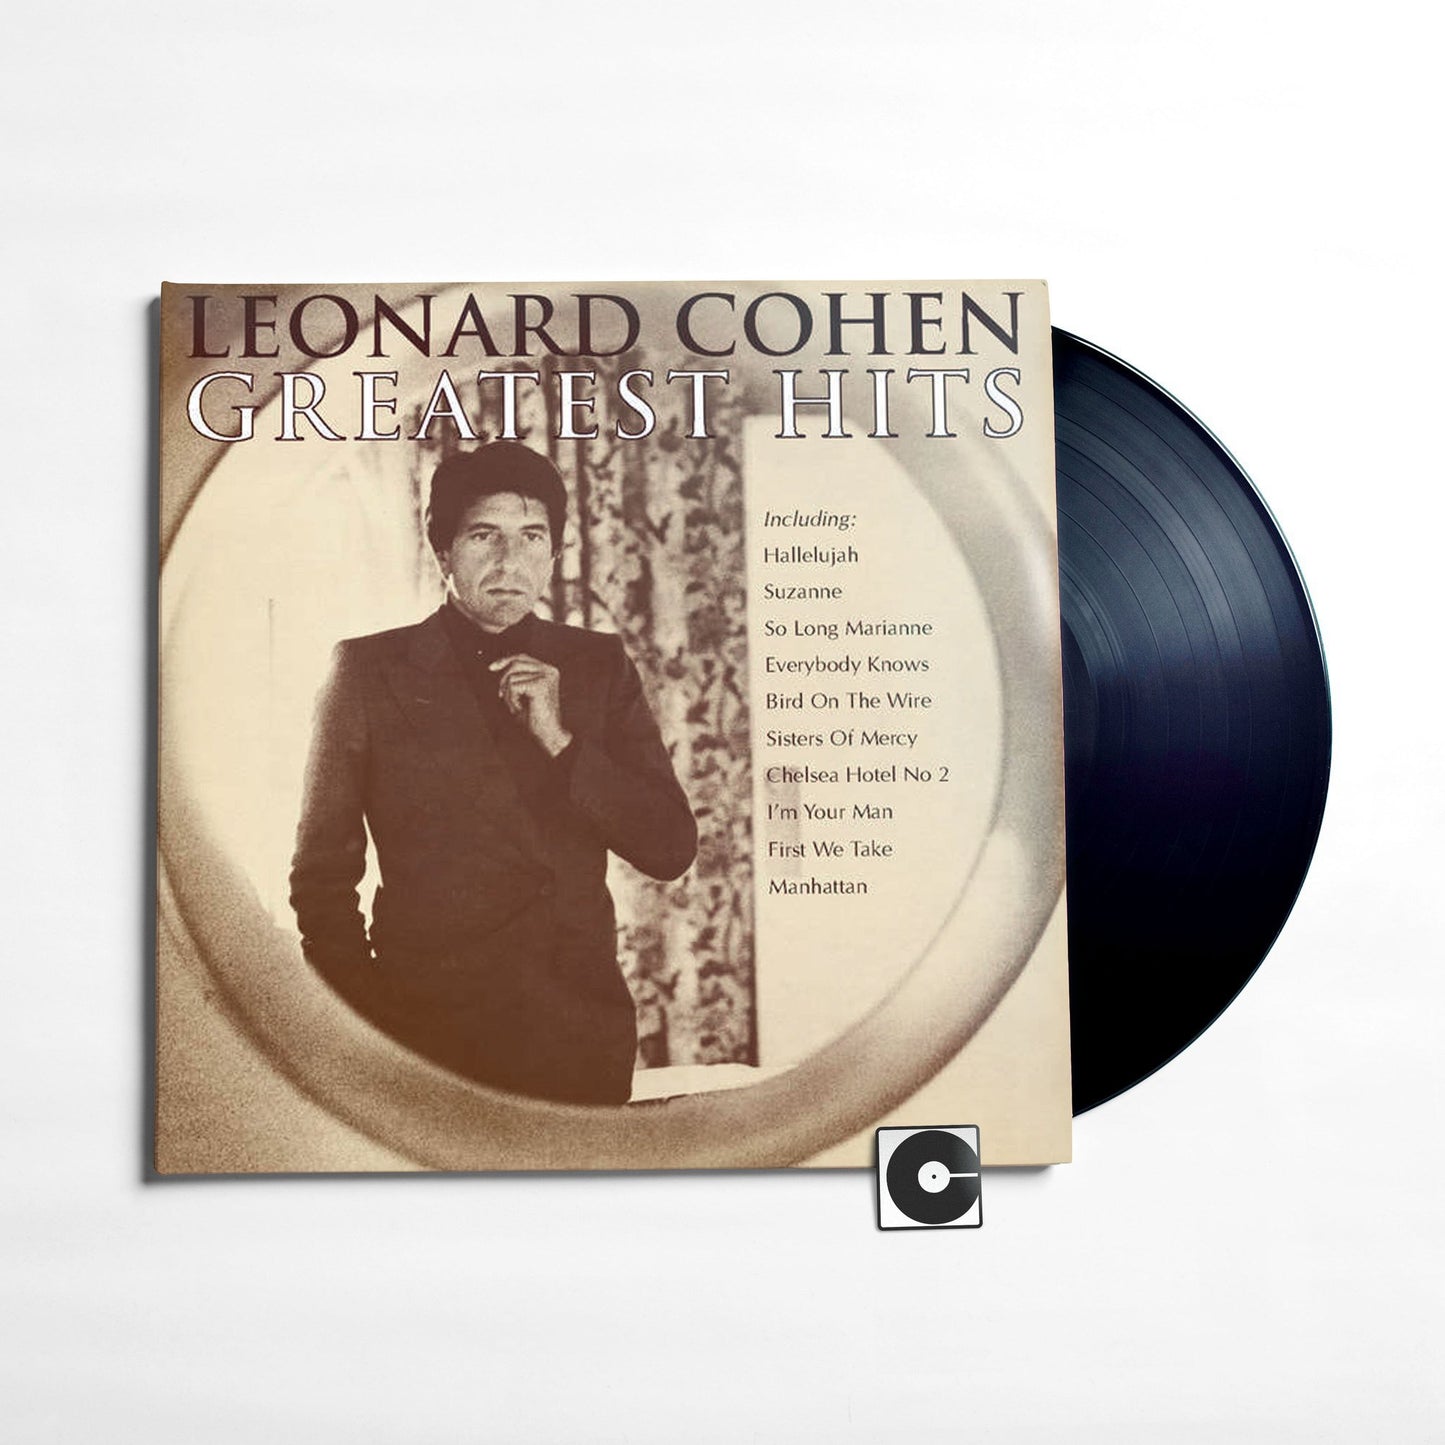 Leonard Cohen - "Greatest Hits"